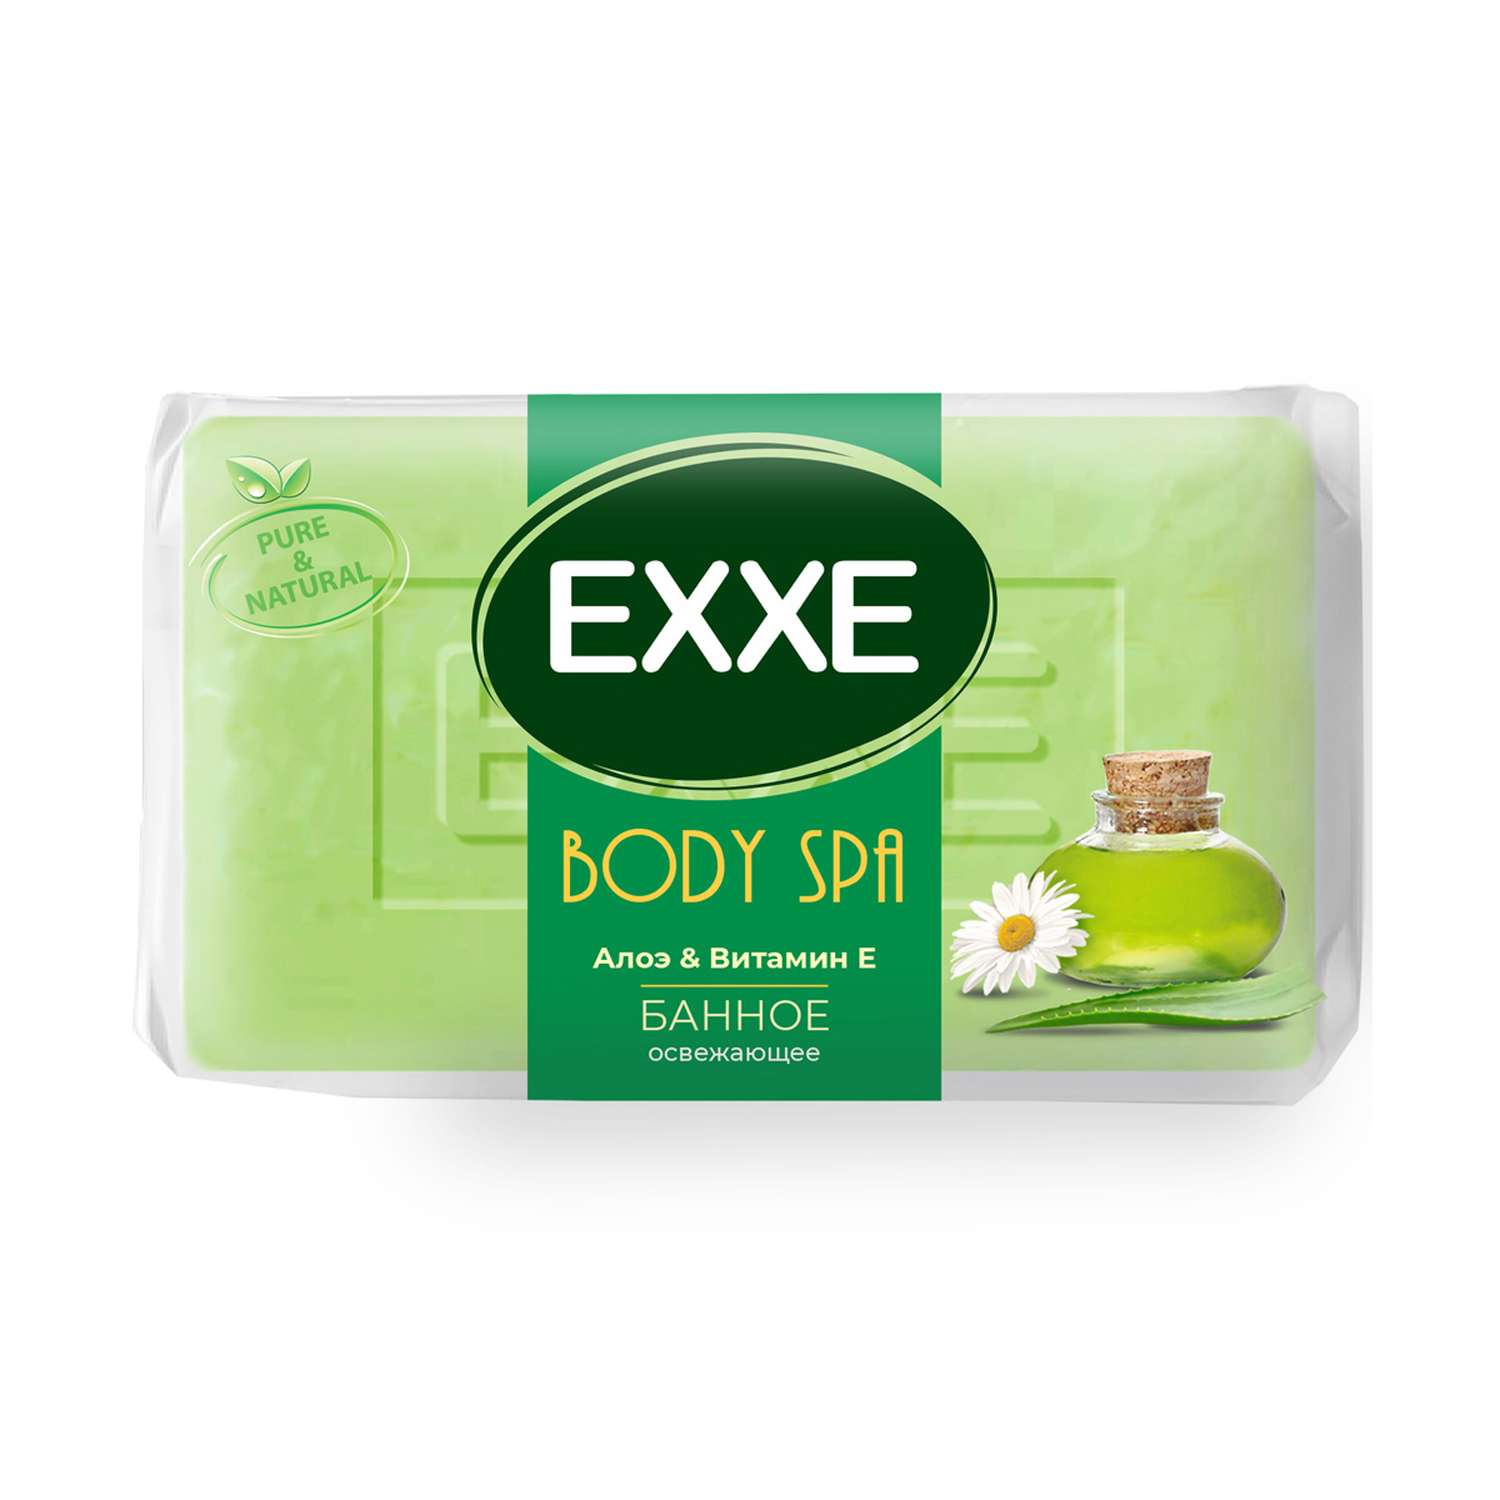 Мыло банное EXXE body spa алоэ и витамин е 160 г - фото 1